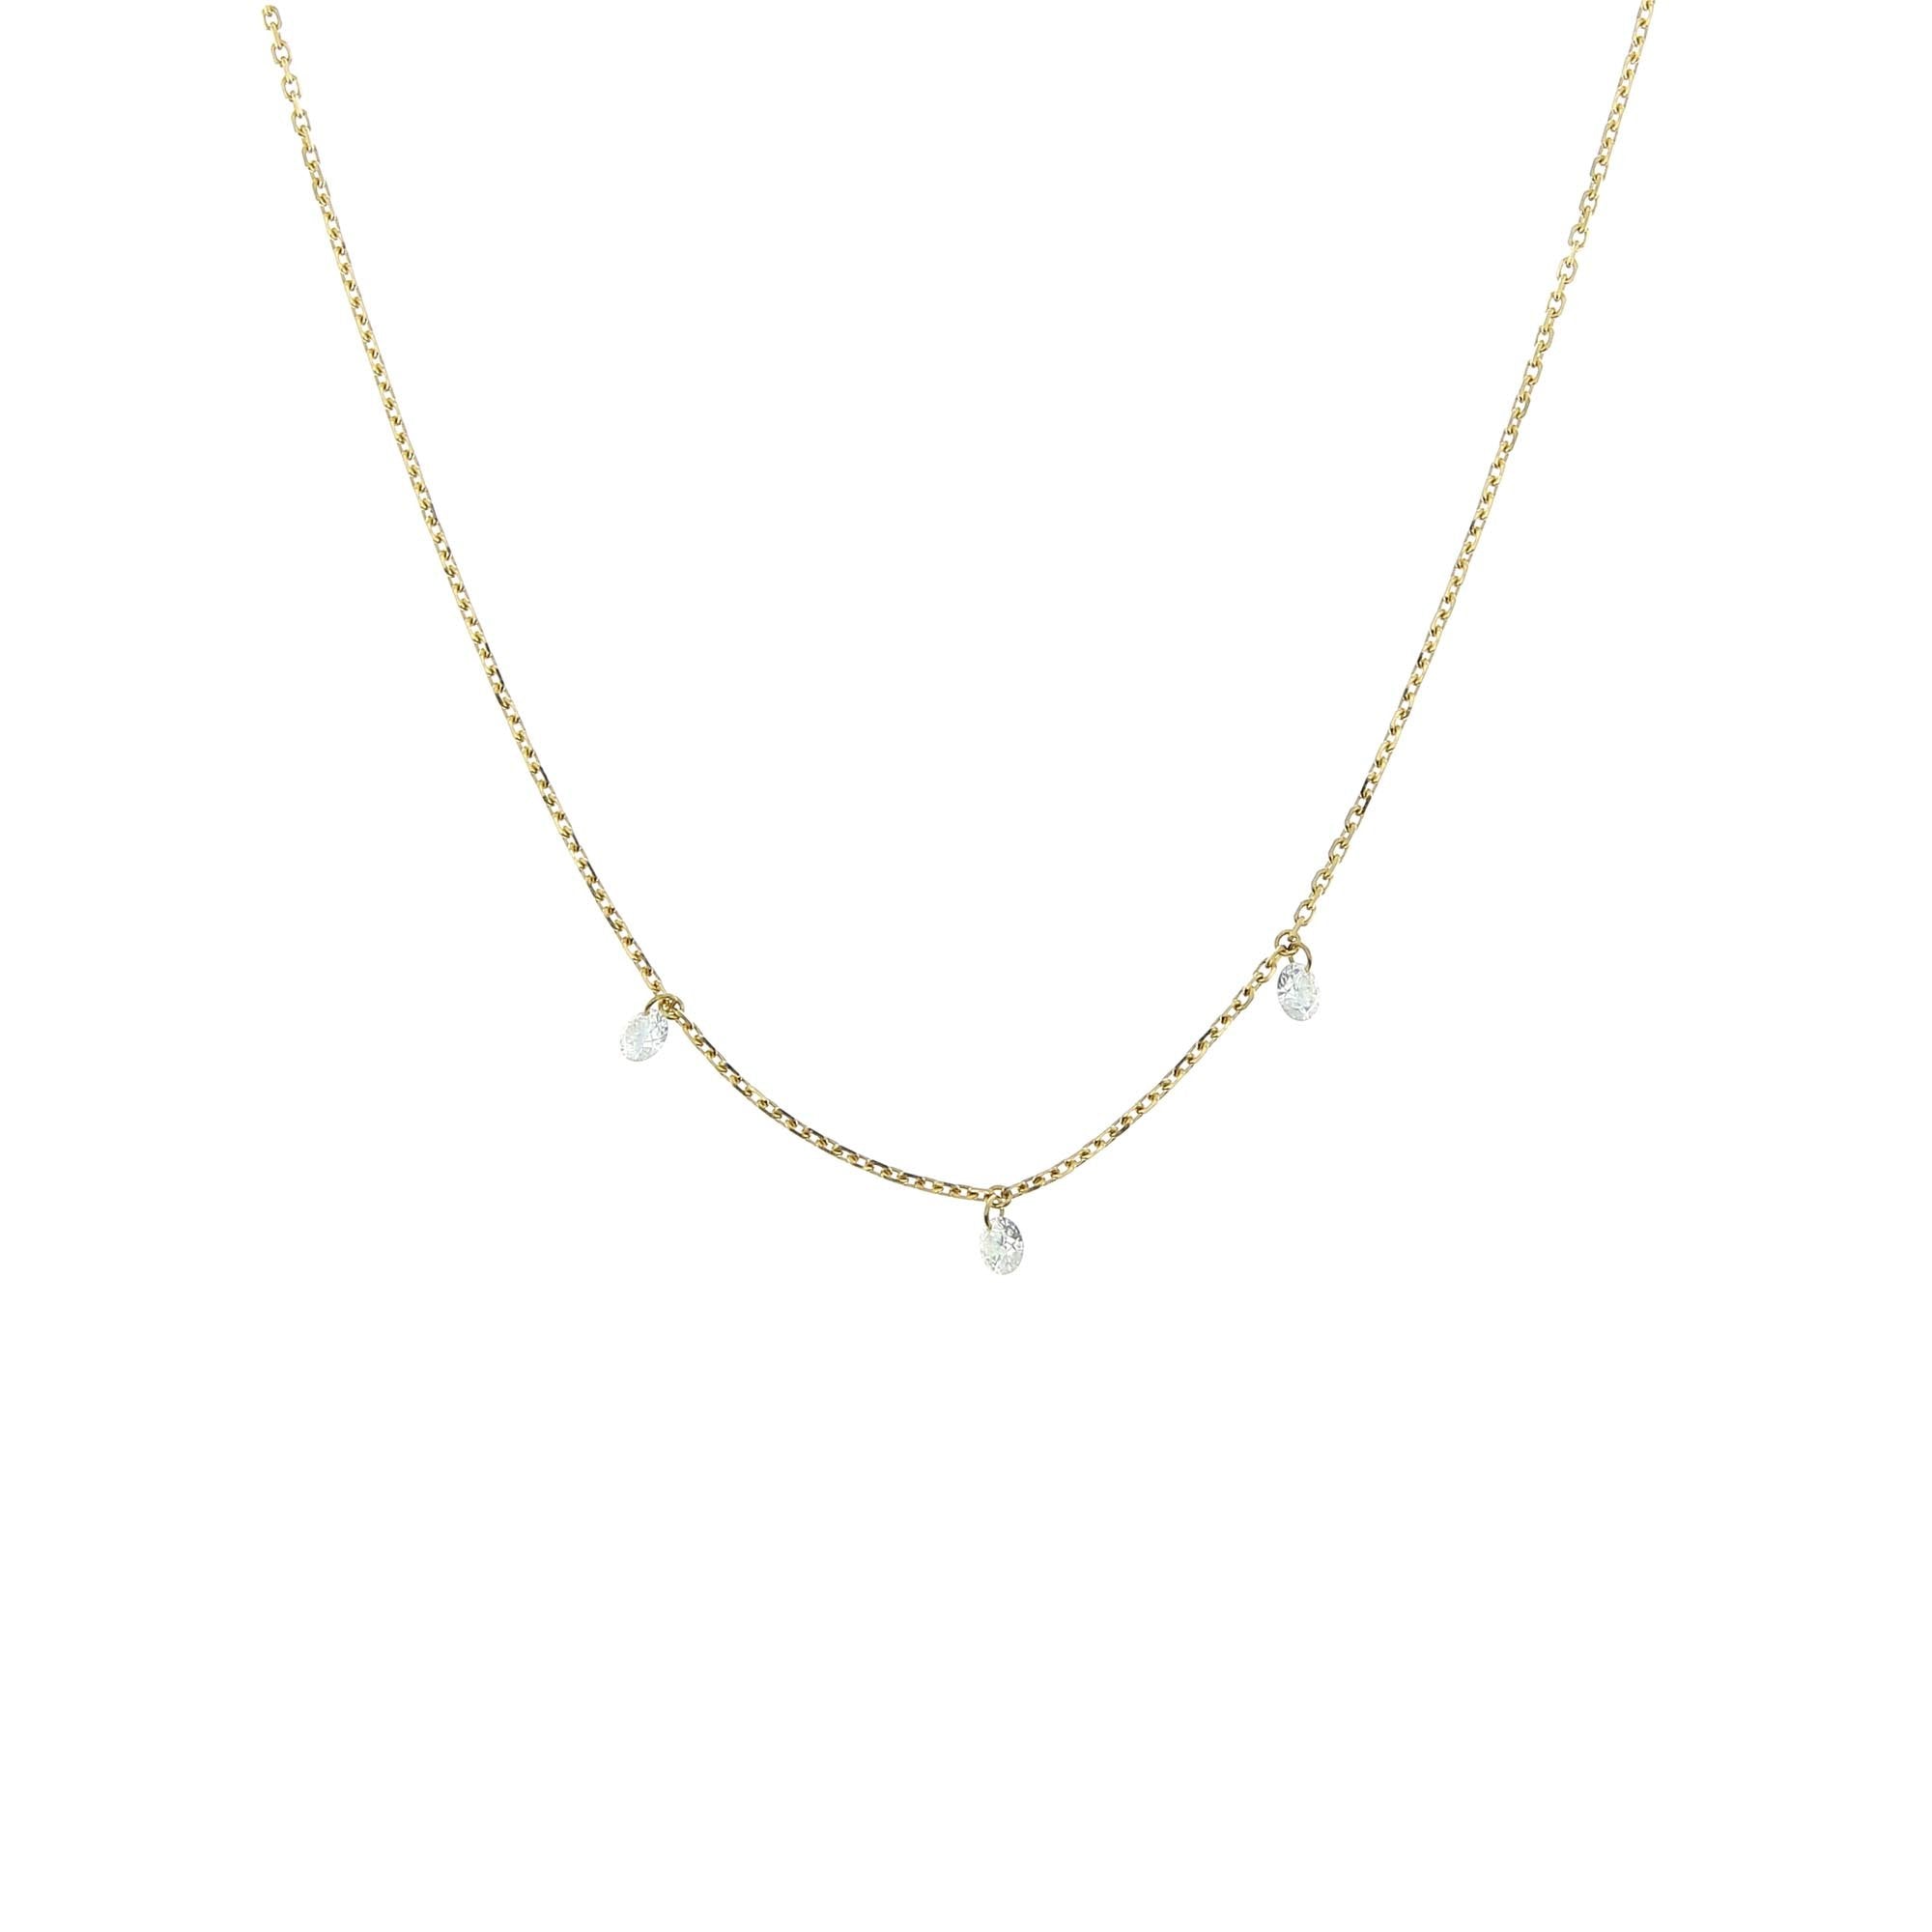 3mm yellow gold necklace pendant diamonds